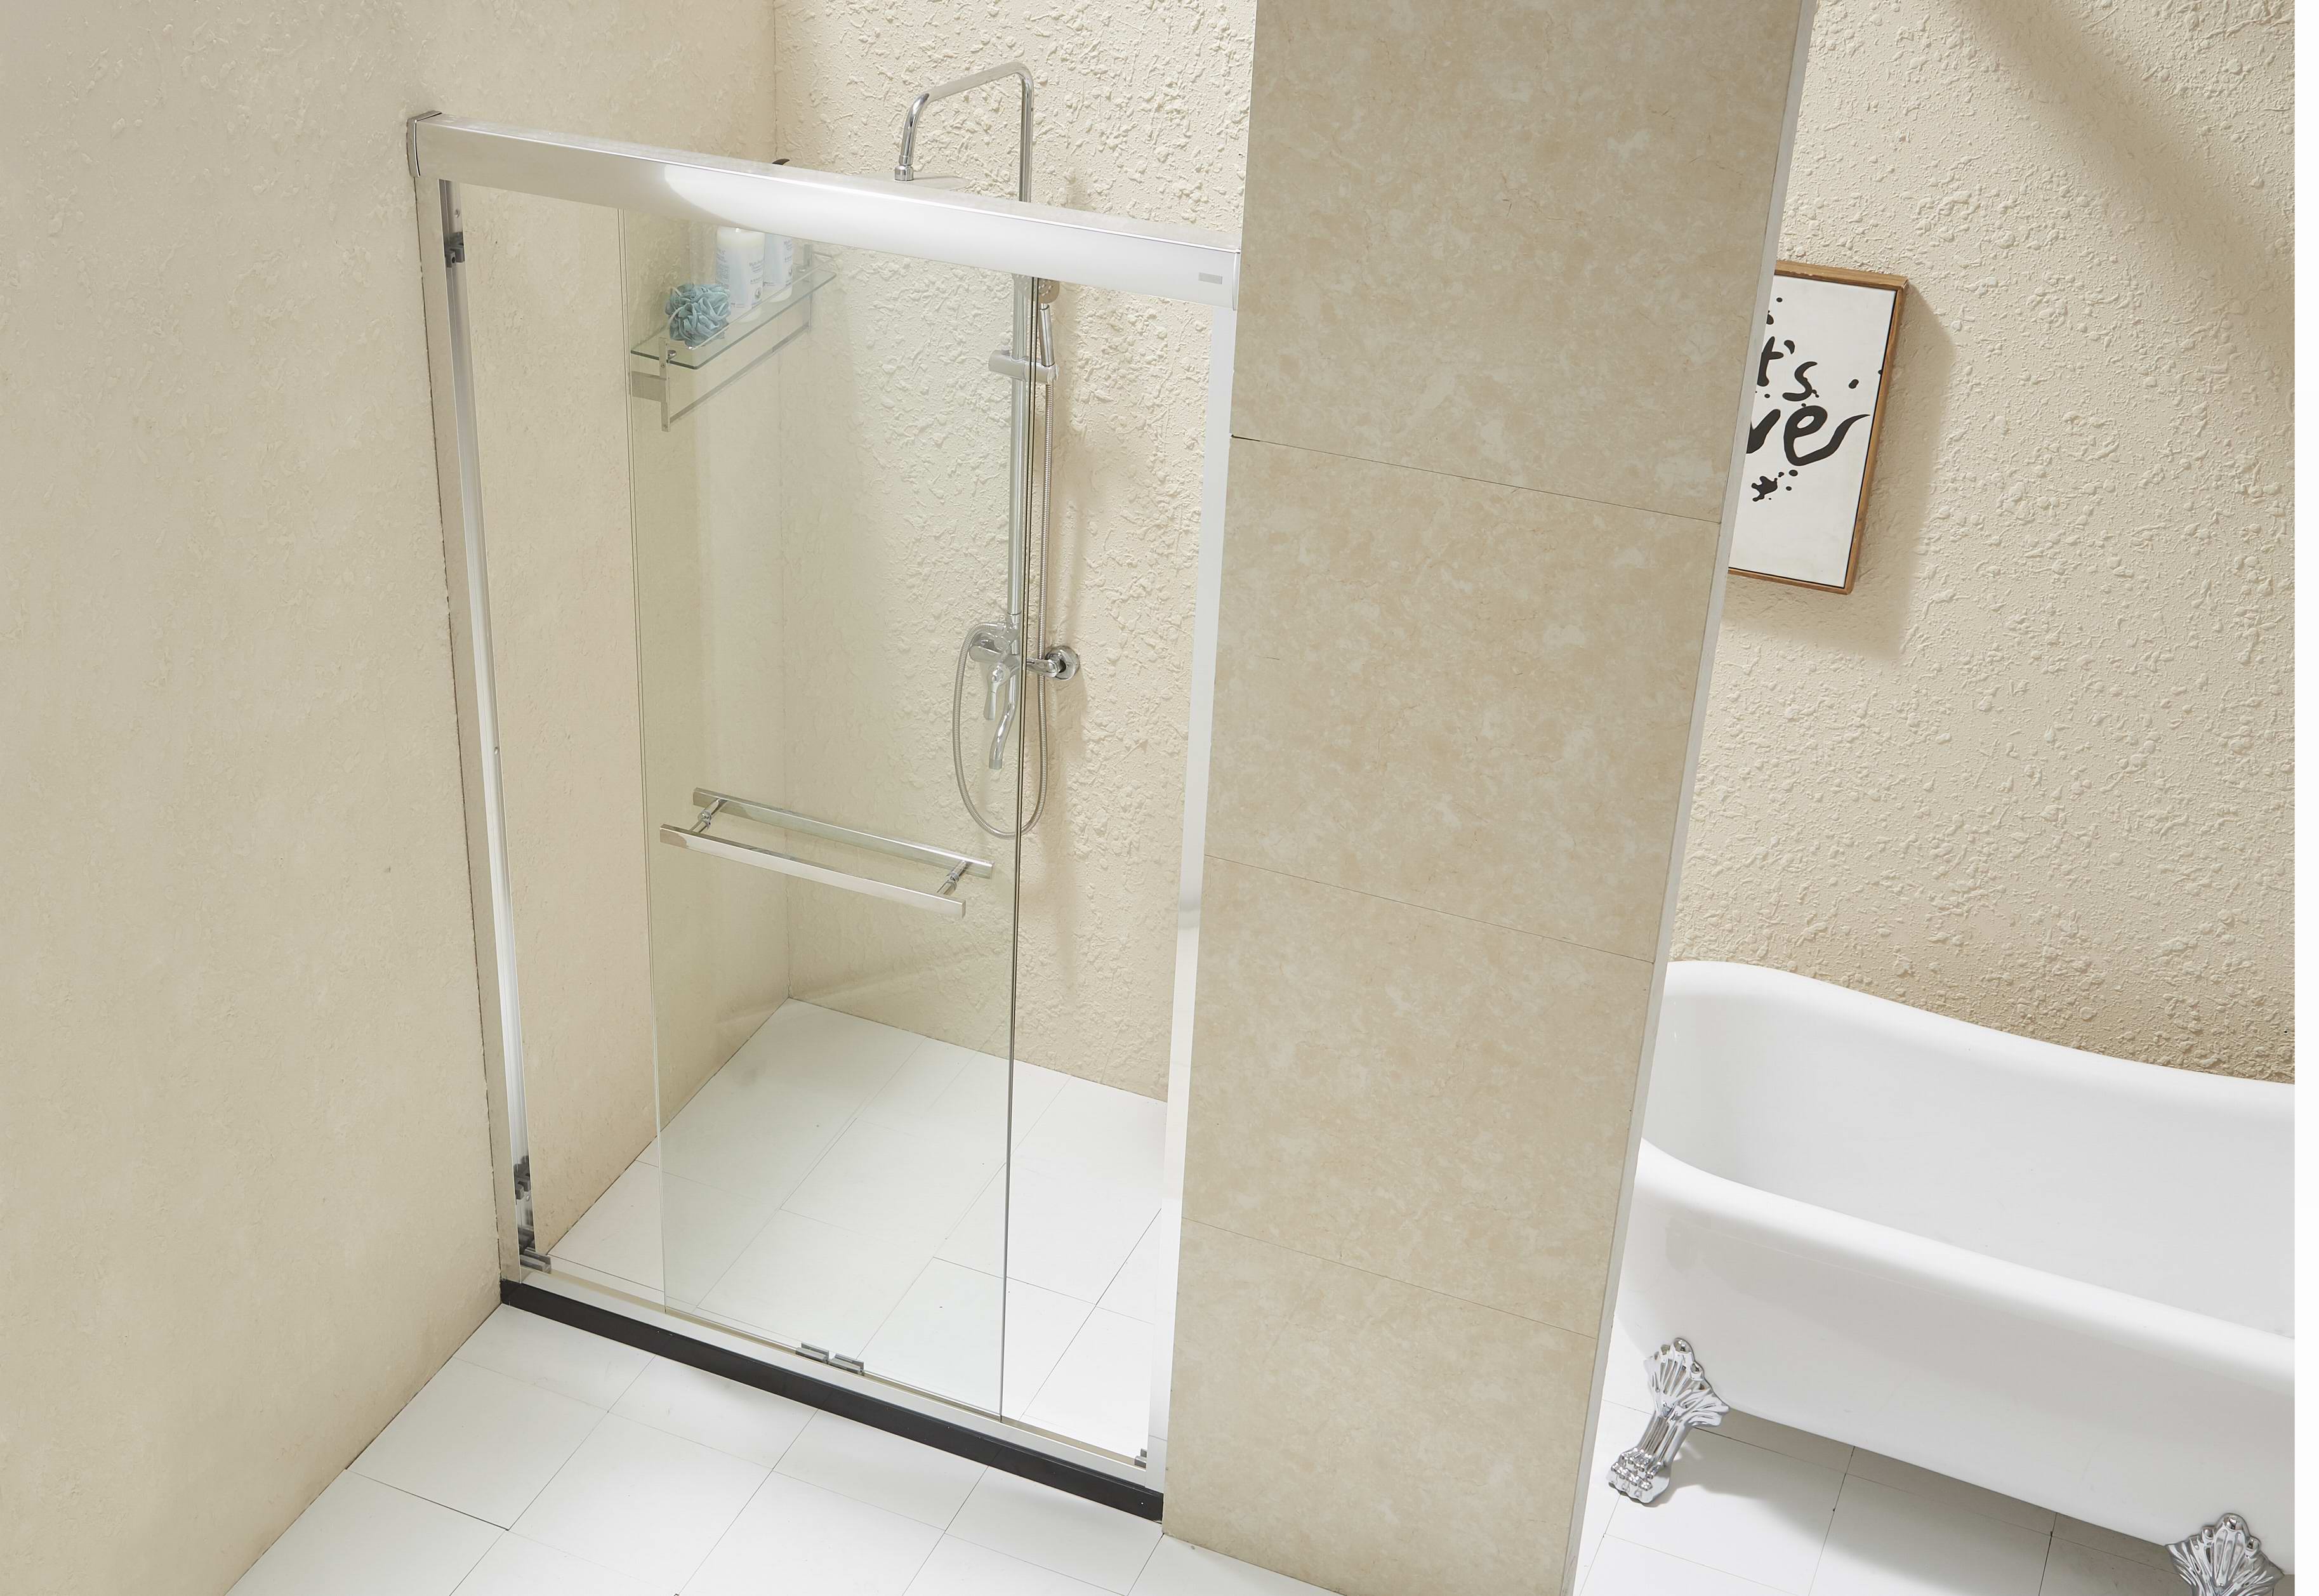 2020 New Bathroom Shower Door Tempered Glass Sliding 6/8mm Panles Aluminum Frame With Long Handle